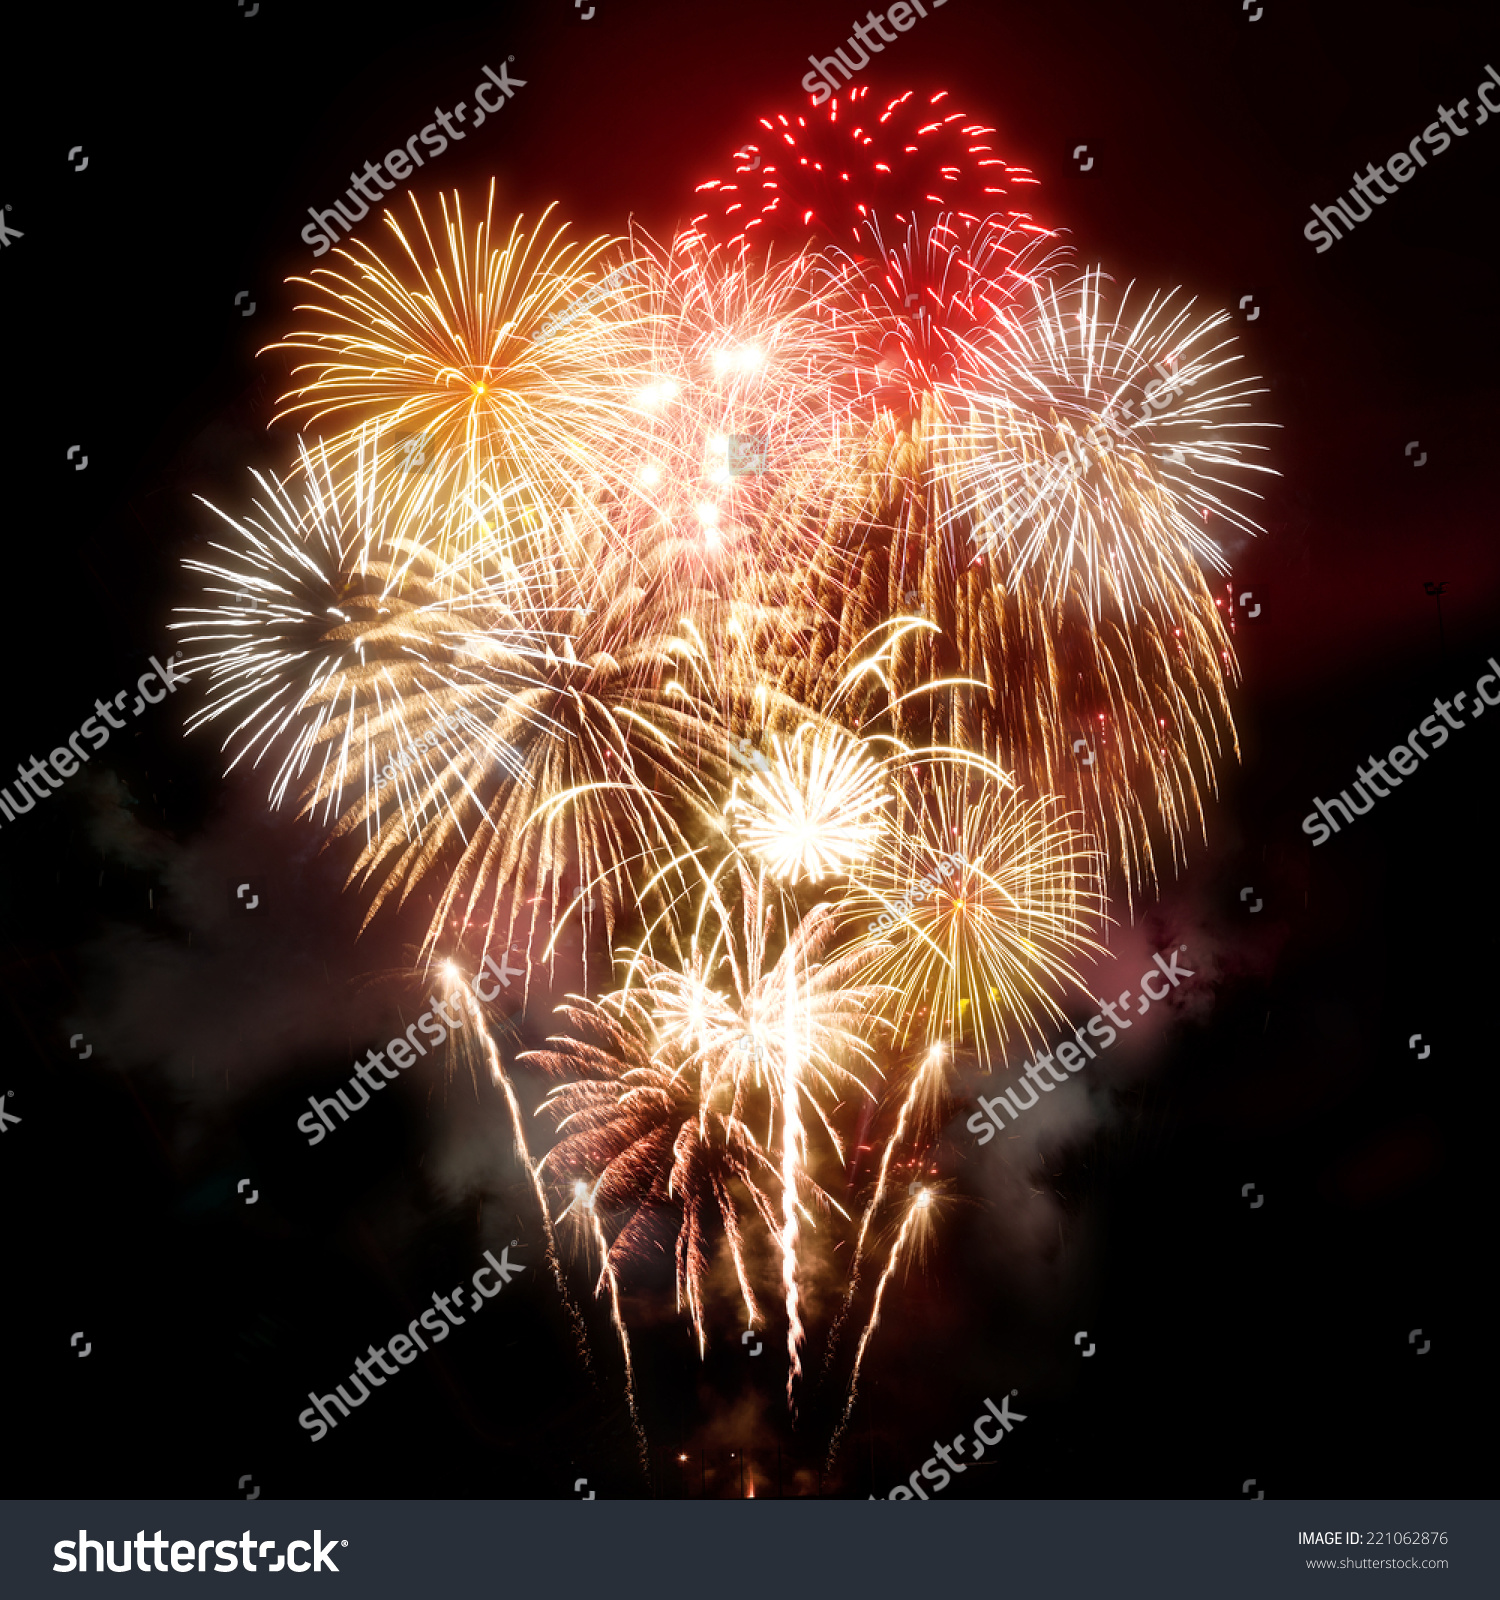 Large Golden Celebration Fireworks Display Stock Photo (Royalty Free ...